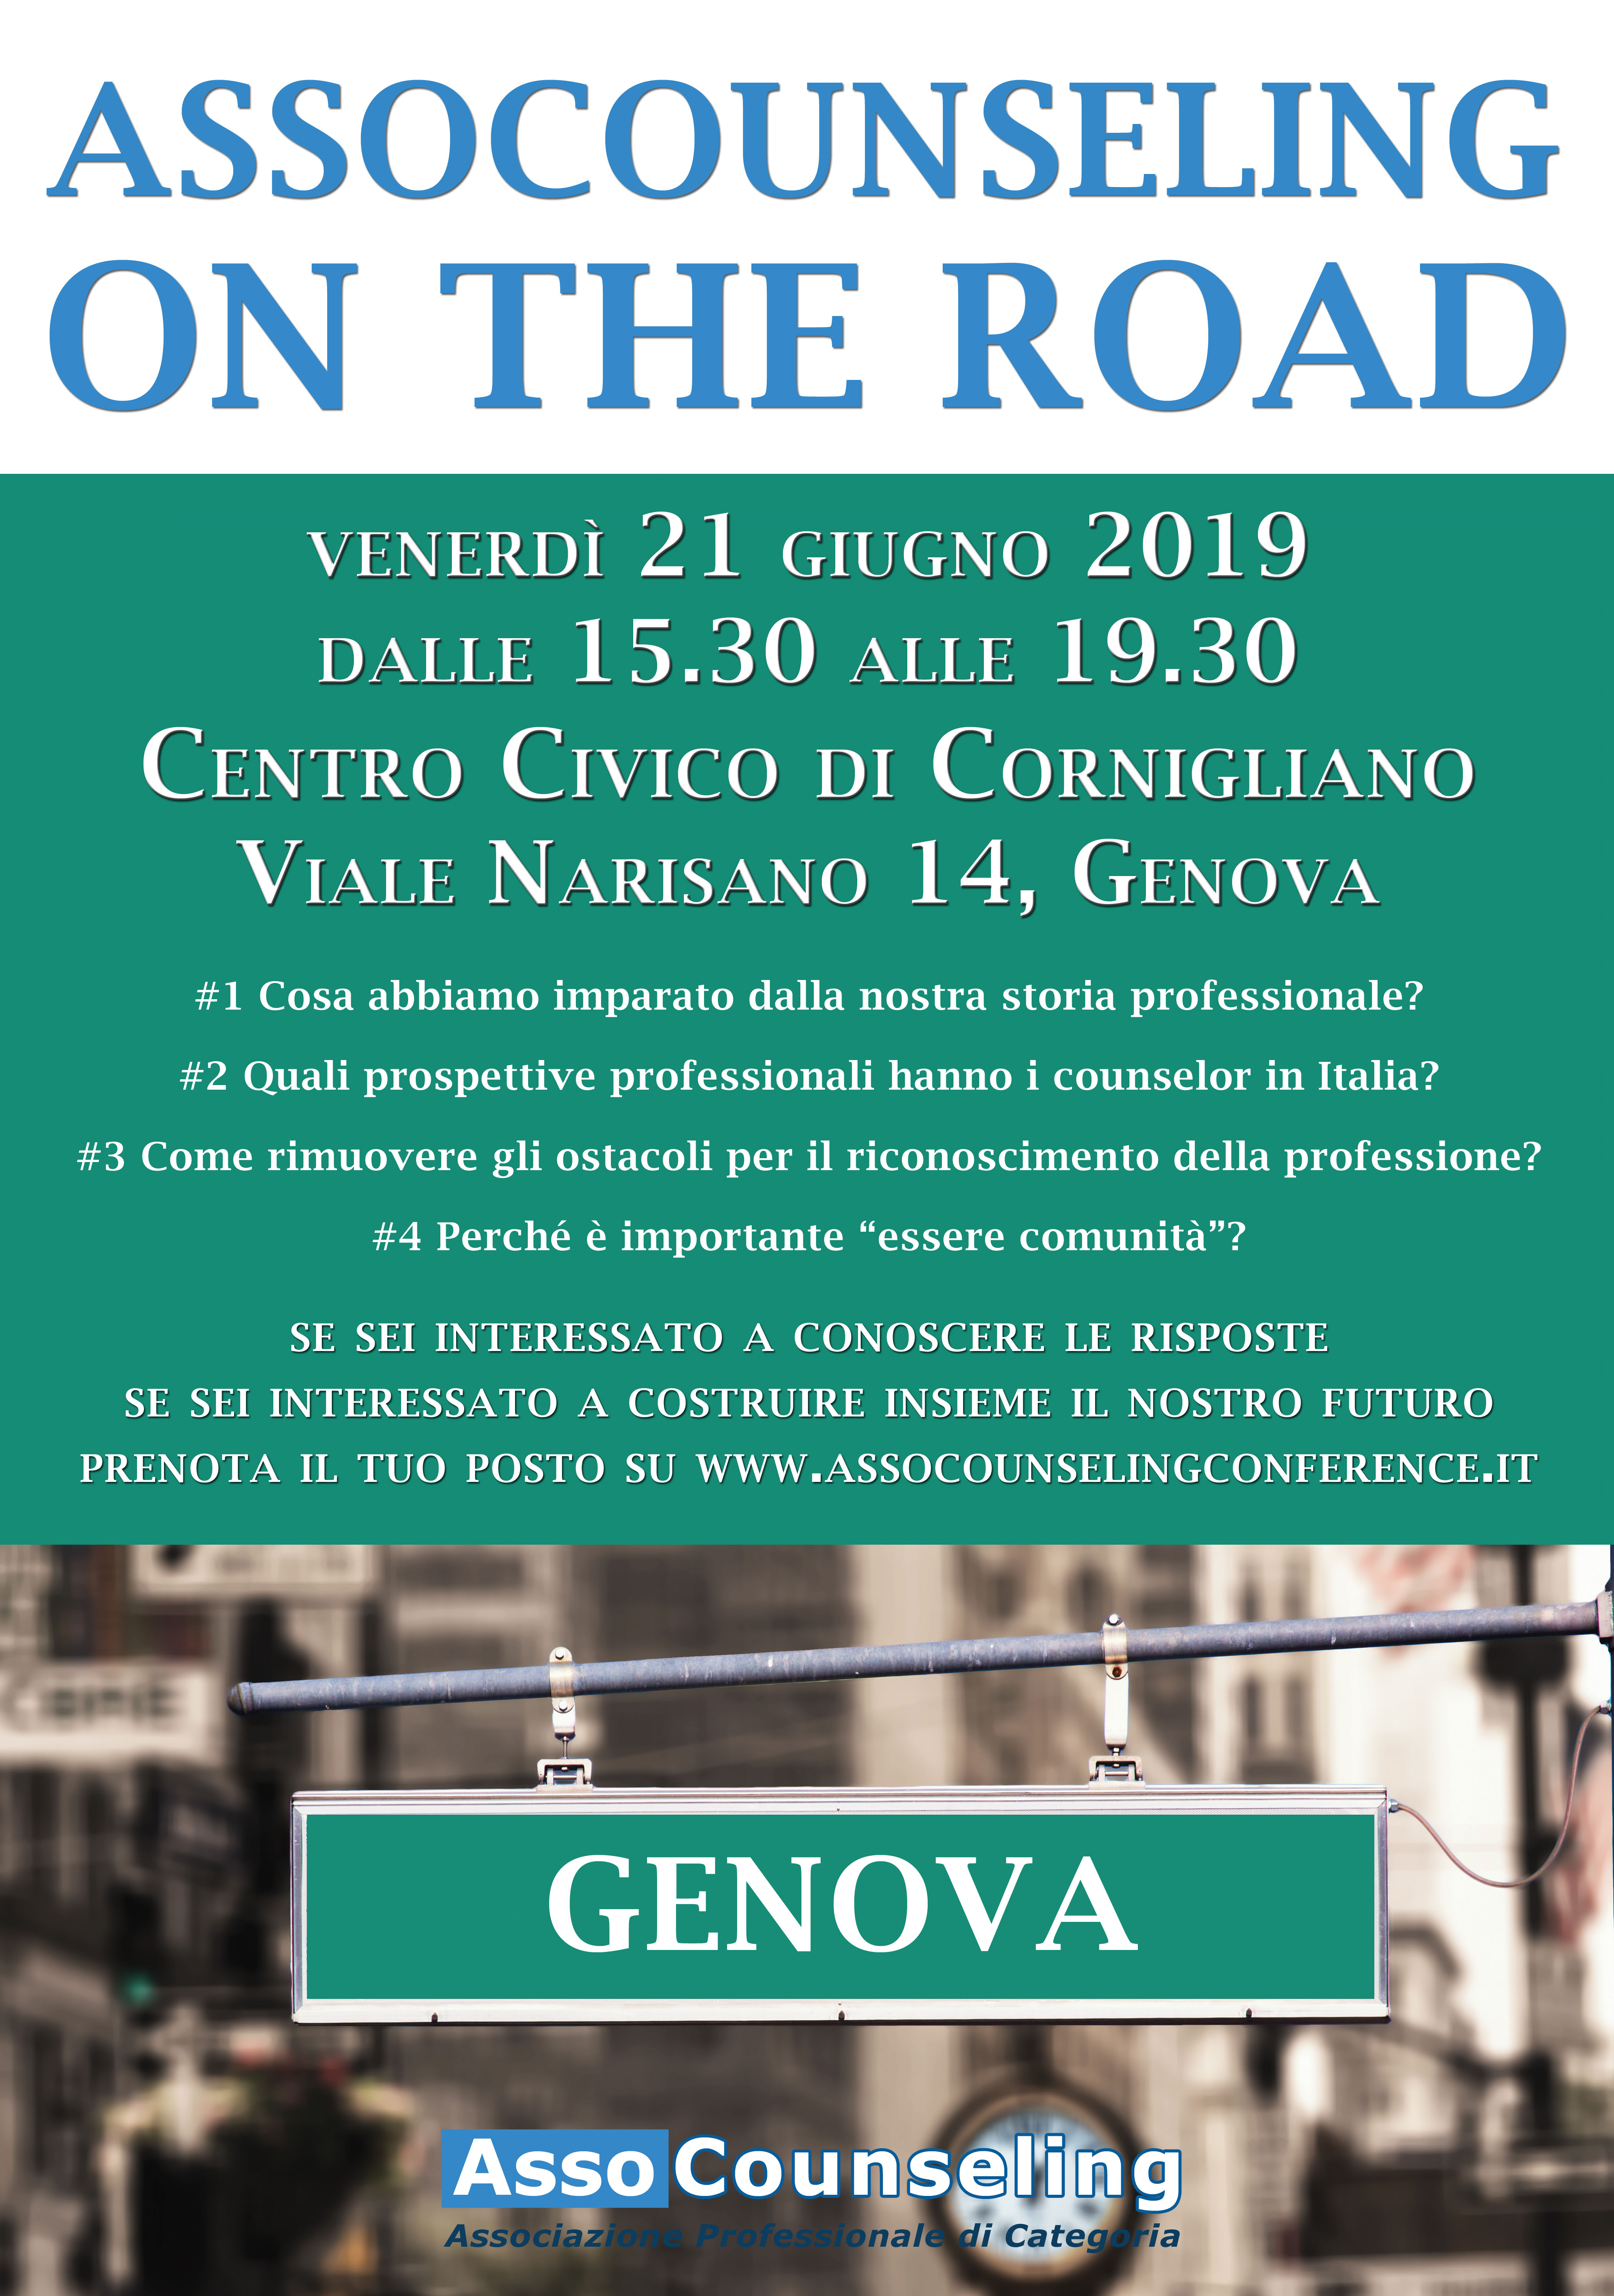 AssoCounseling on the road, ottava tappa, Genova